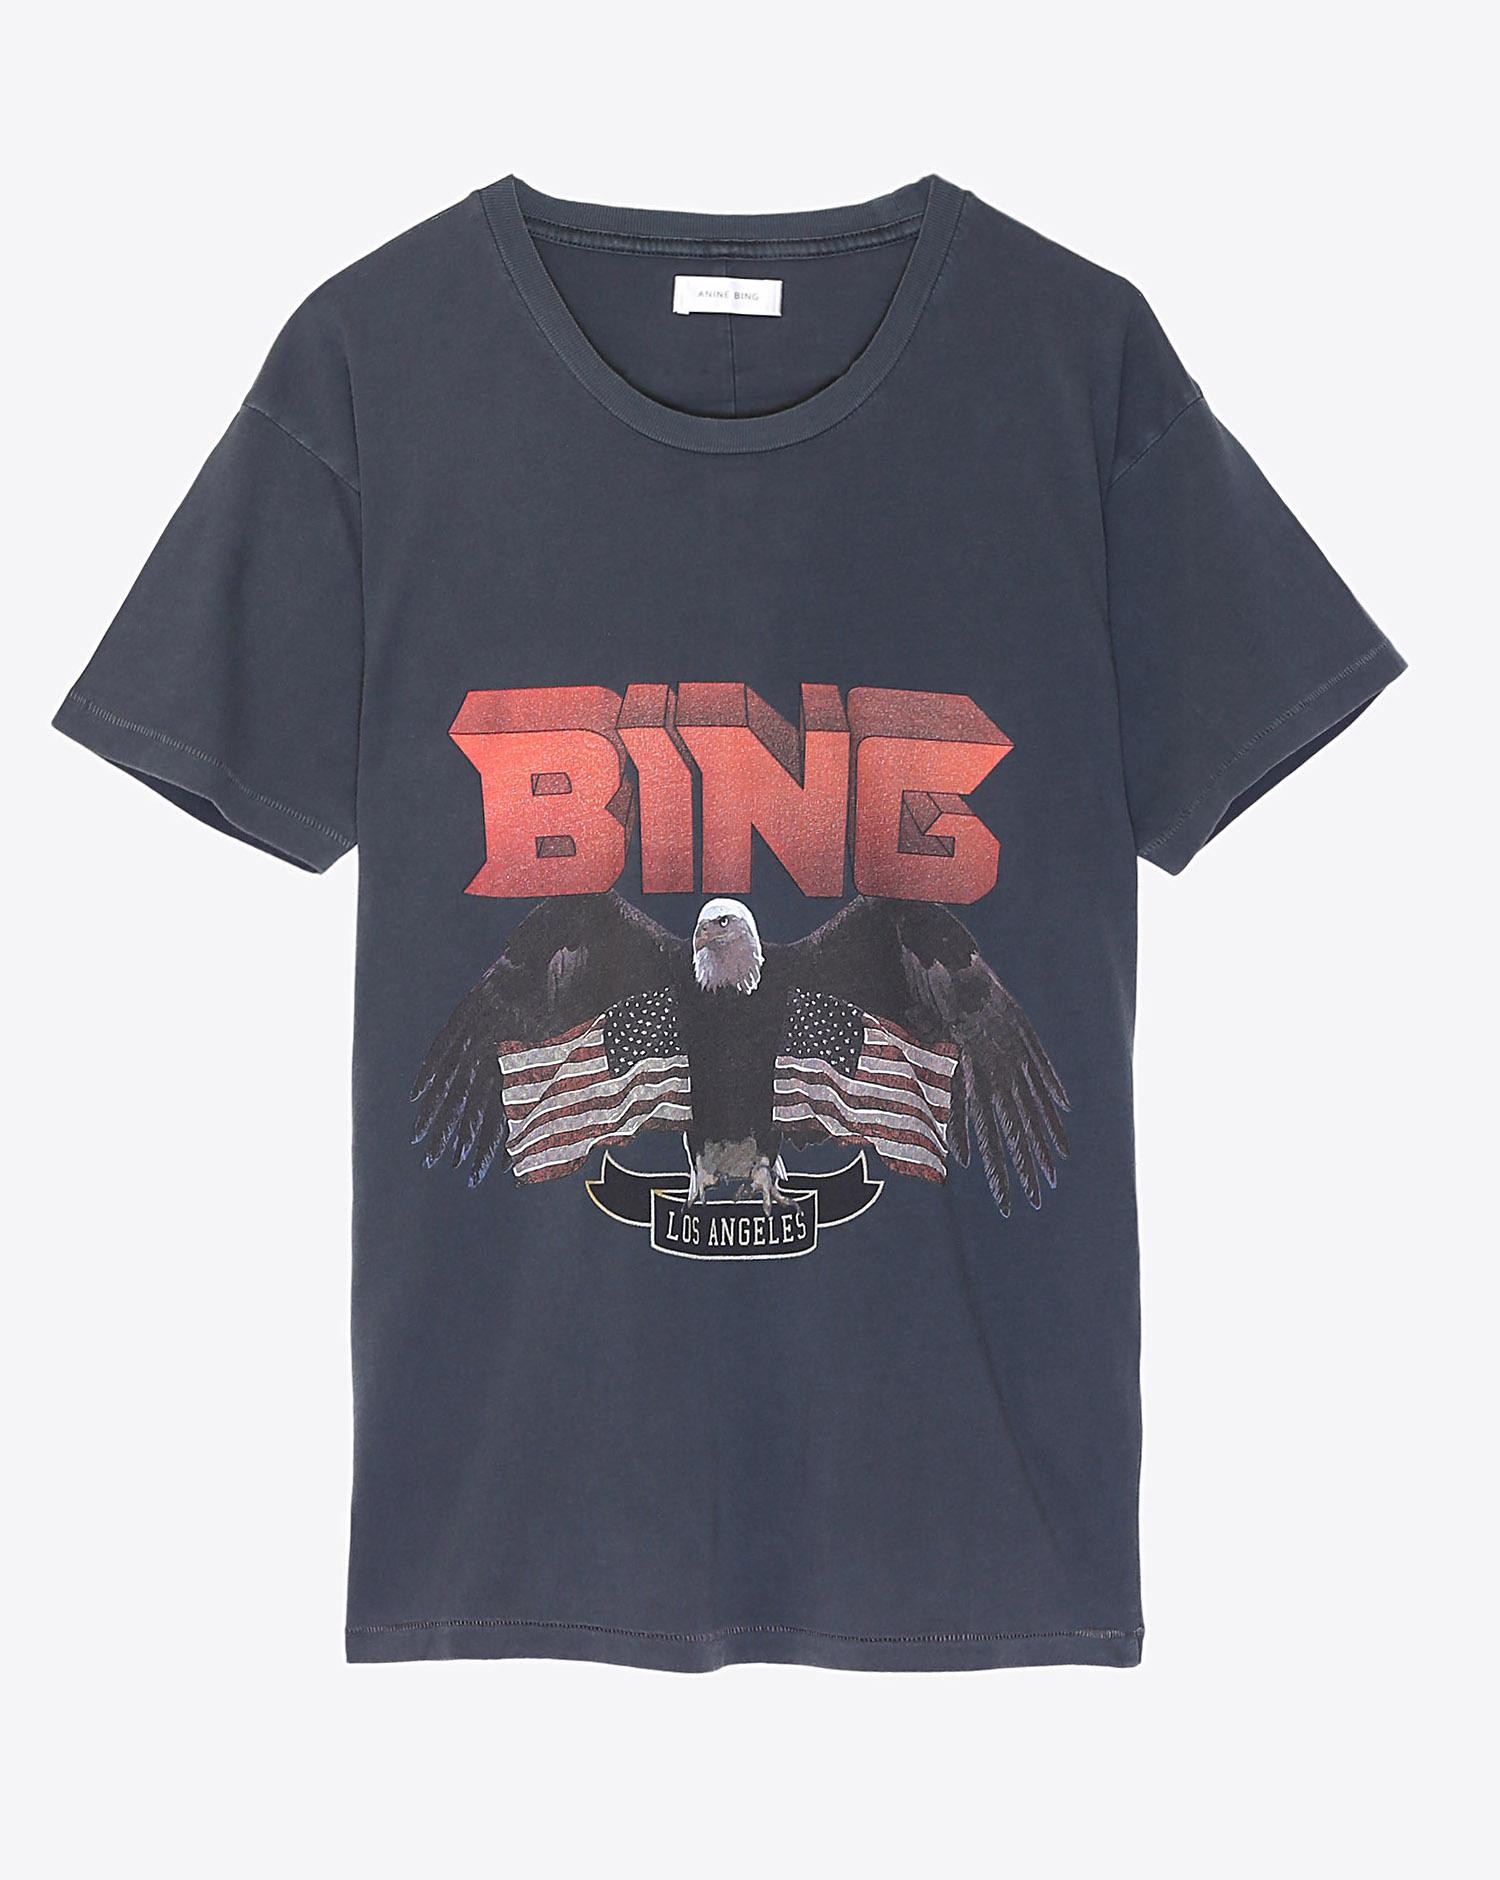 Tee-shirt Aigle Vintage bing tee black Anine Bing. Face.